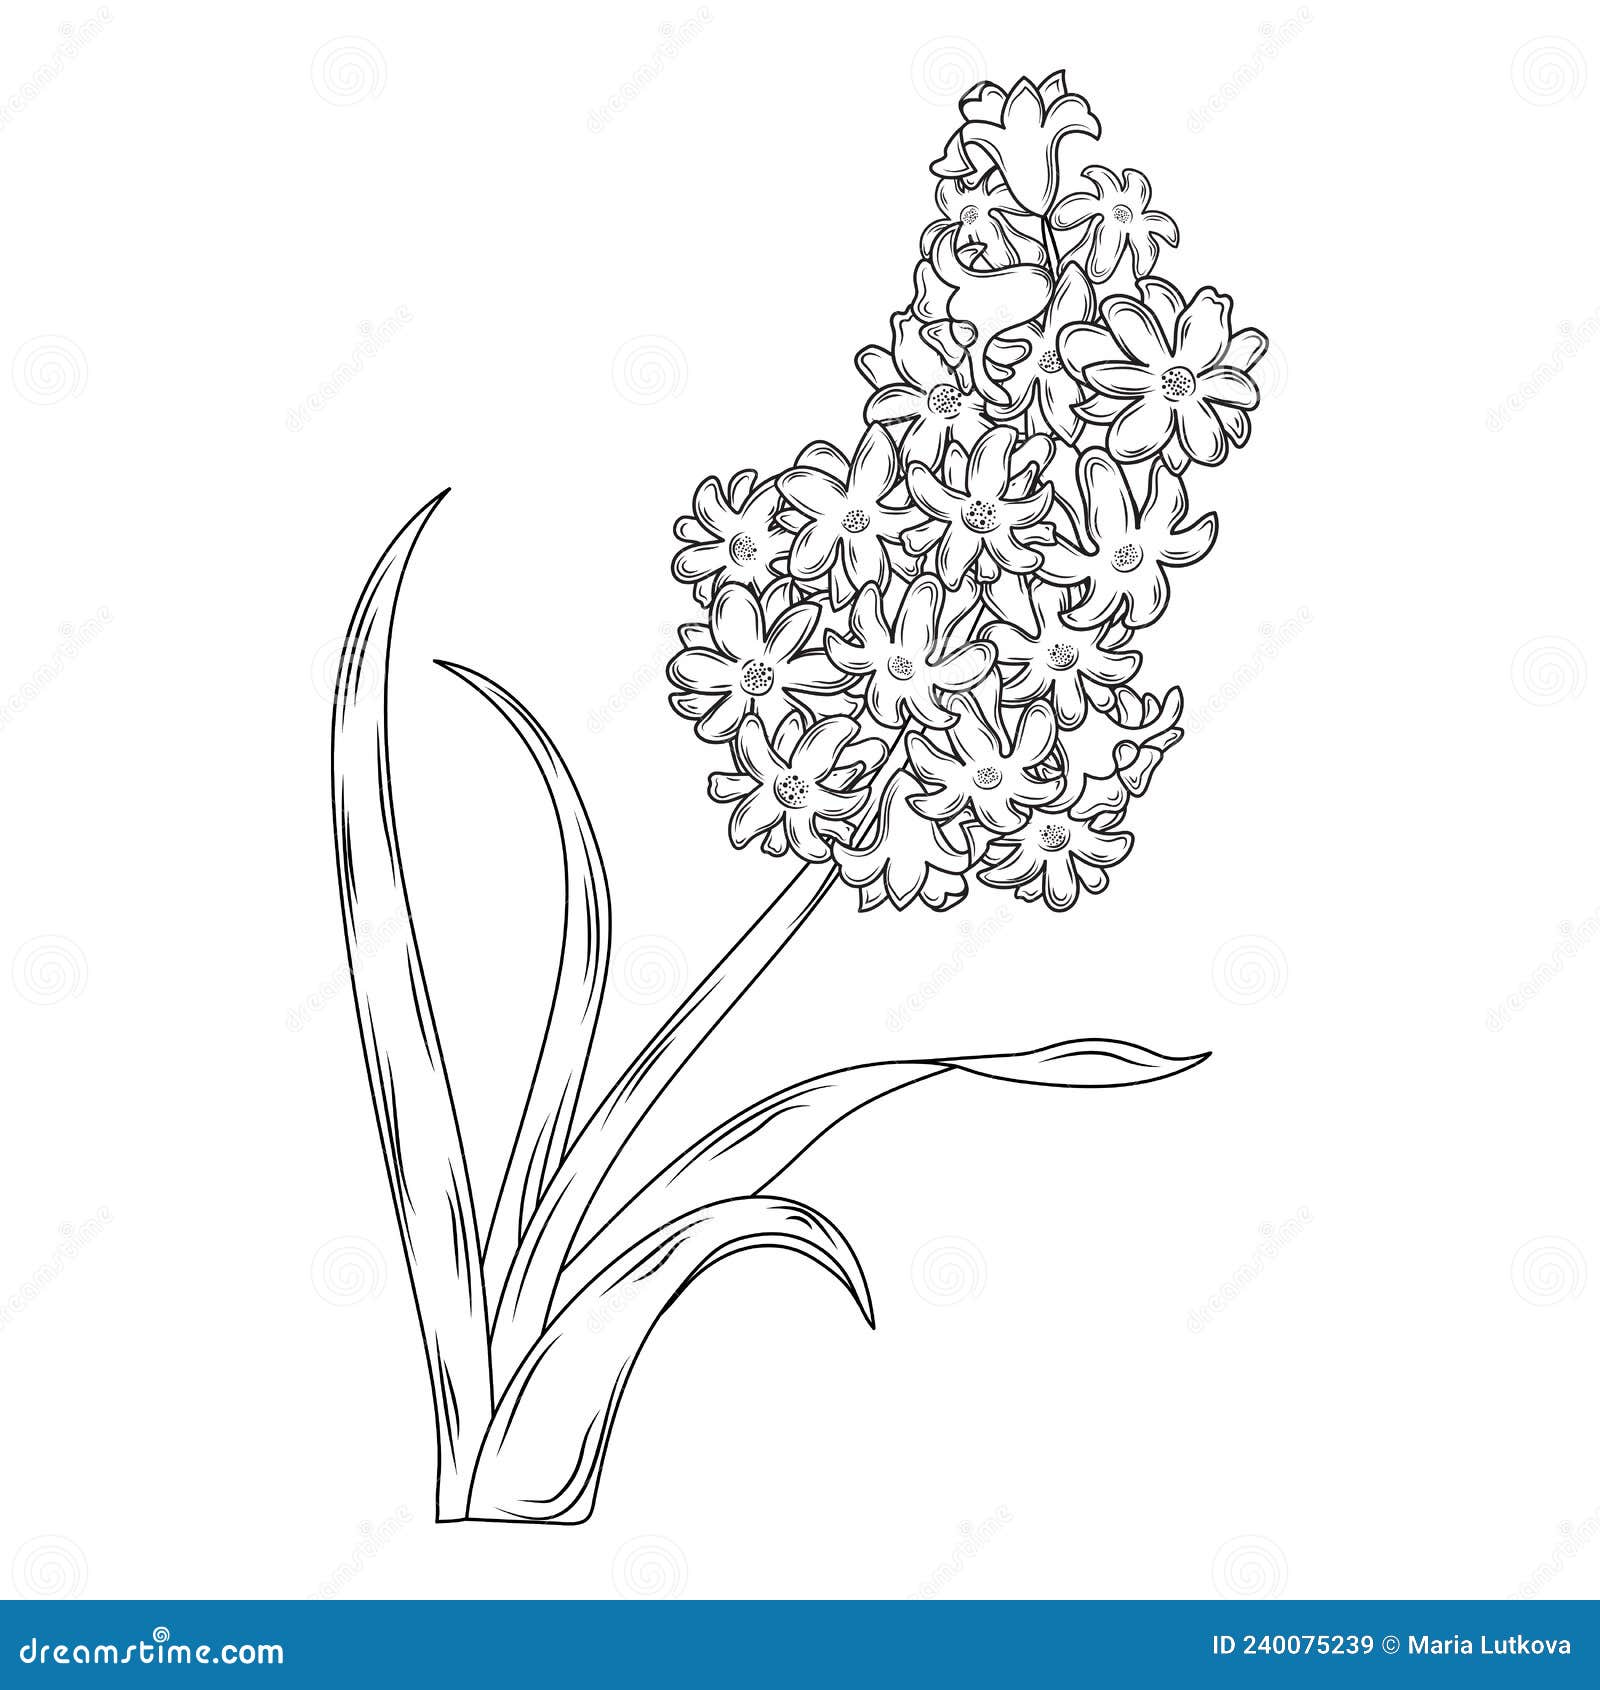 Eichhornia Crassipes | ClipArt ETC